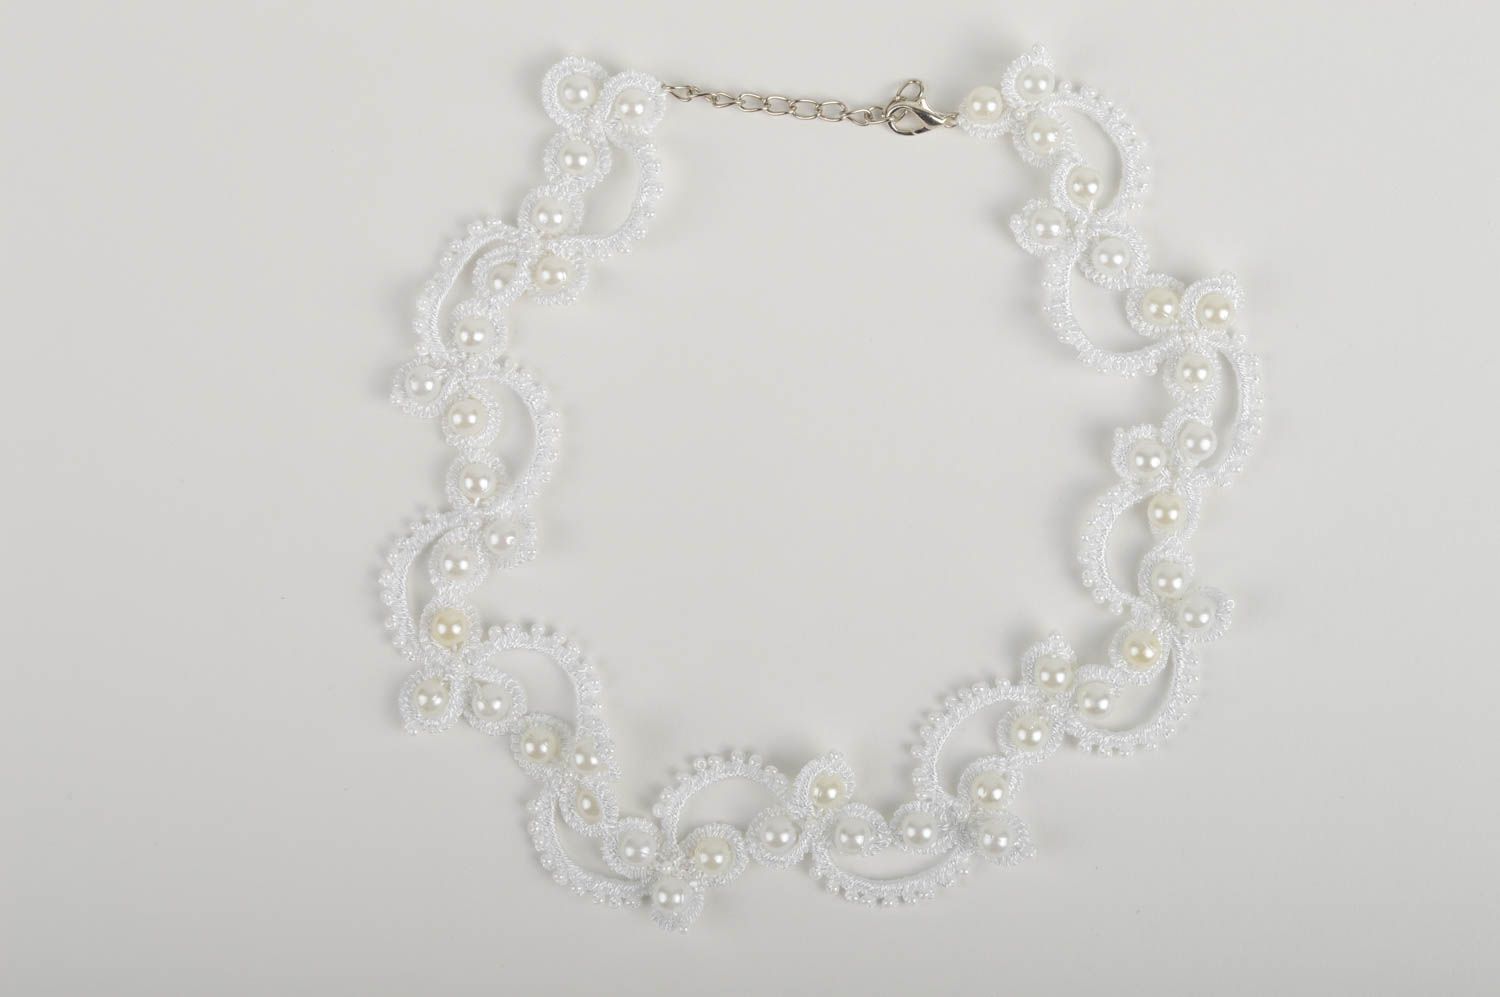 Stylish handmade beaded necklace woven necklace tatting jewelry designs photo 2